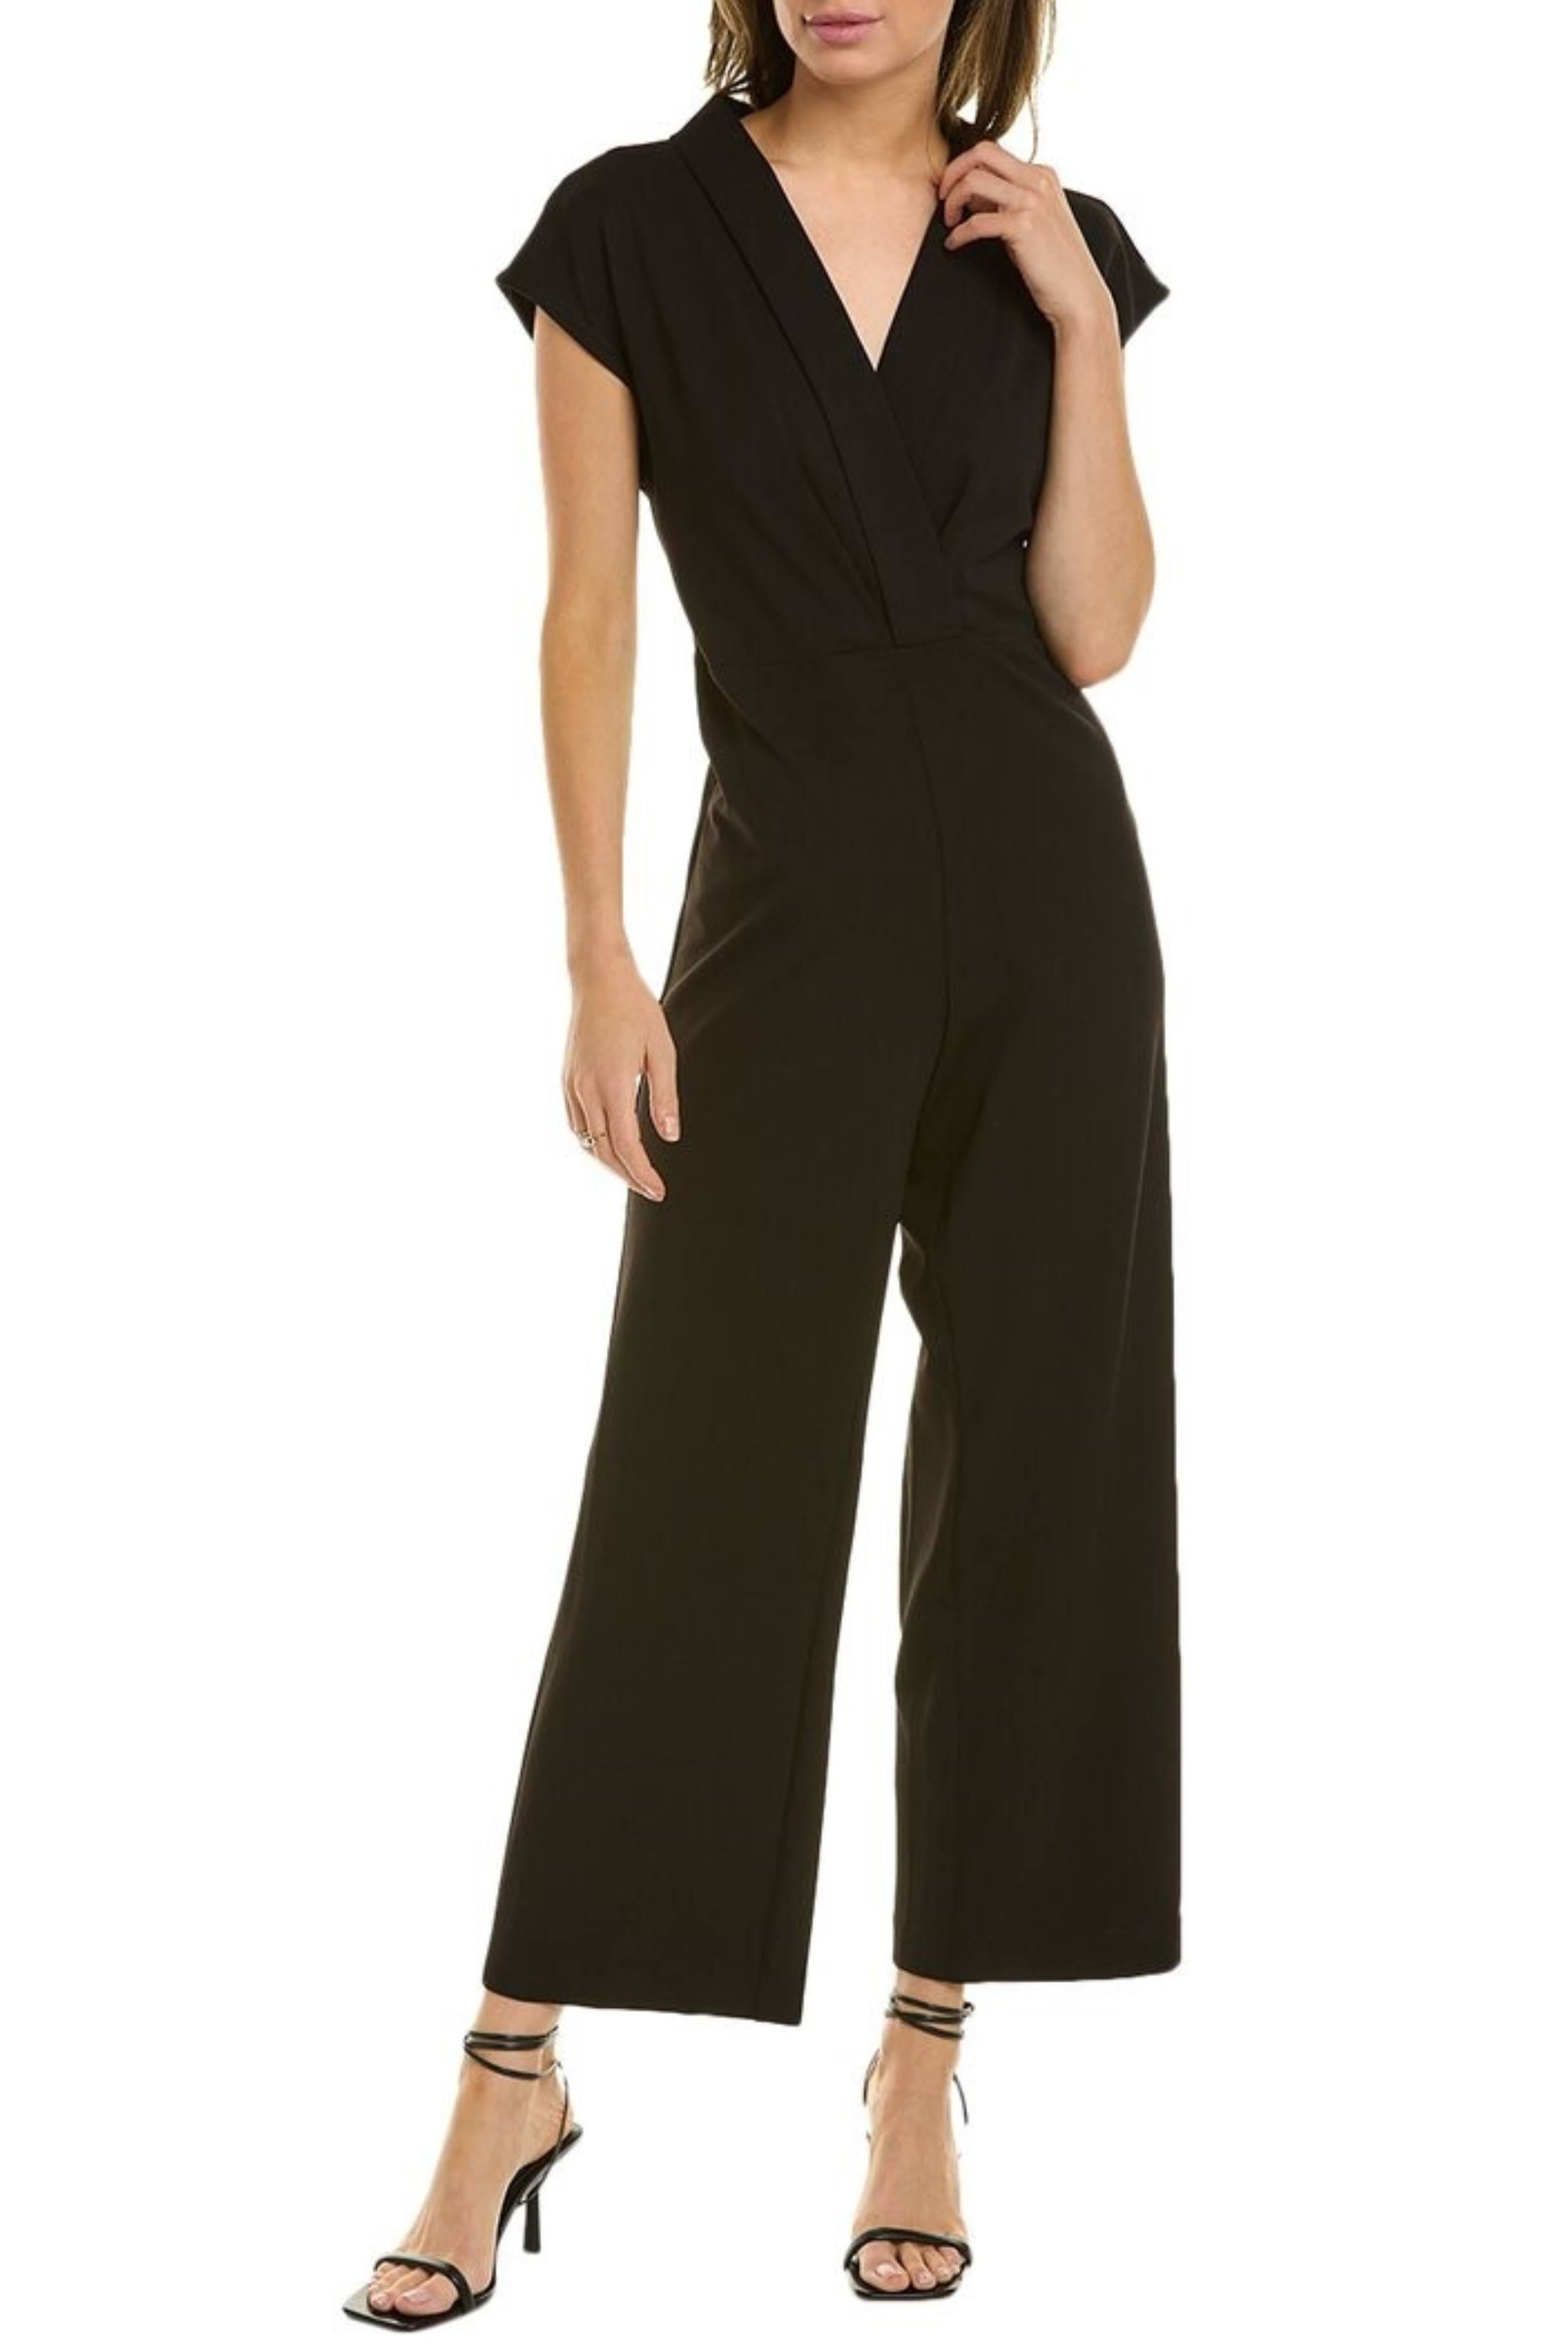 Nicole Miller Cap Sleeve Jumpsuit in Black Short Sleeve Style | Image